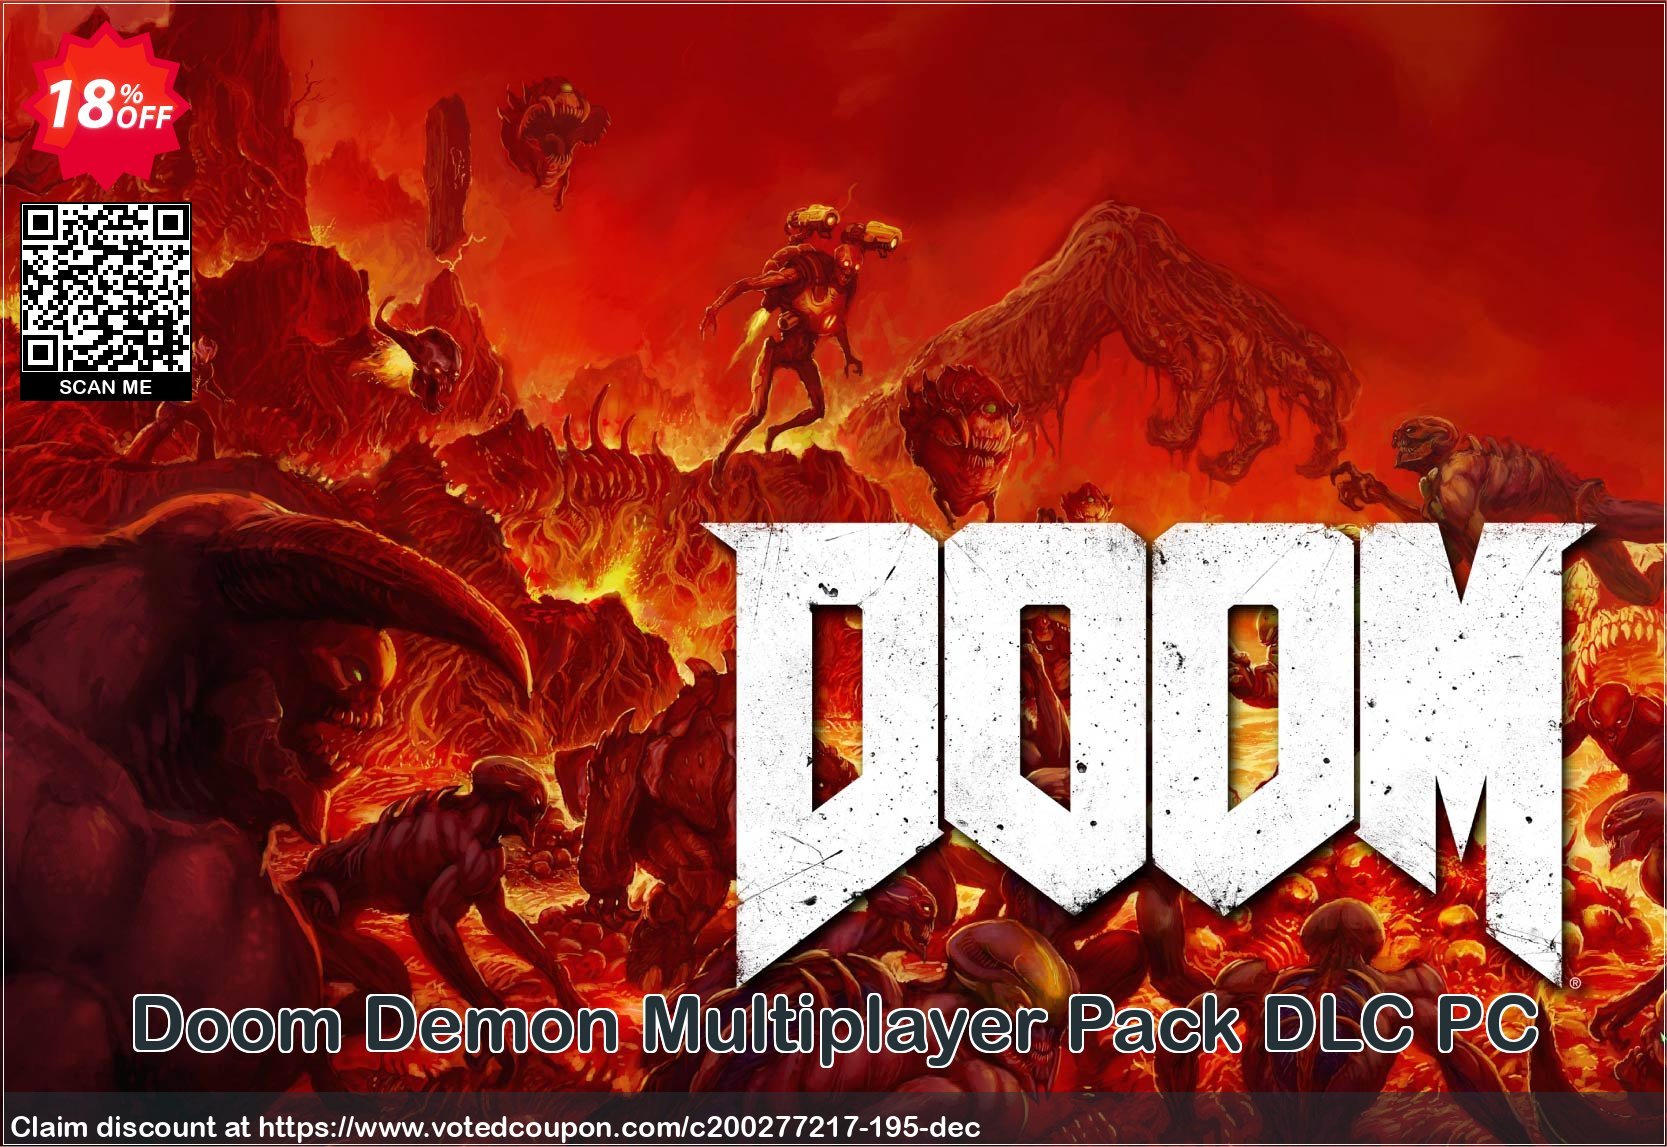 Doom Demon Multiplayer Pack DLC PC voted-on promotion codes